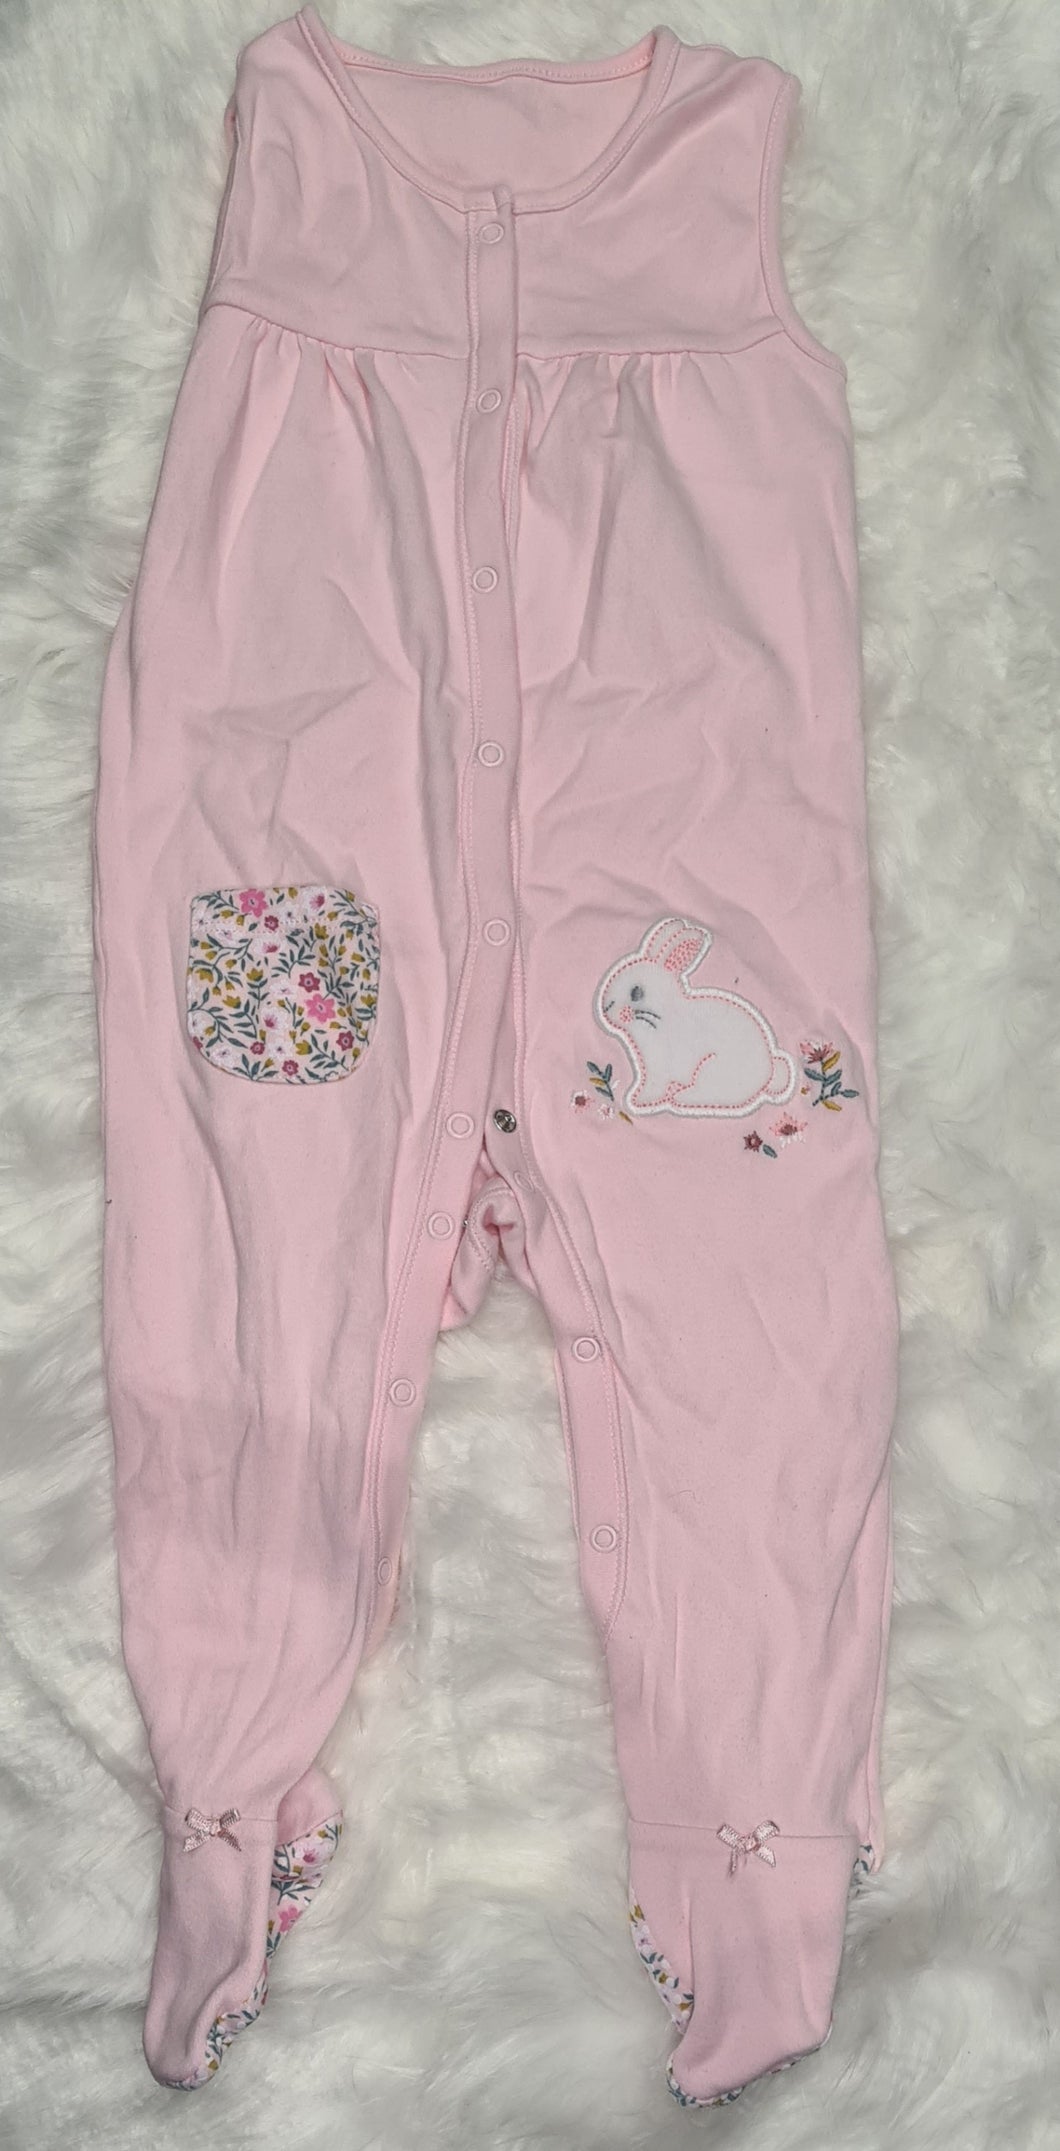 Girls 9-12 Months -Pink Bunny Romper